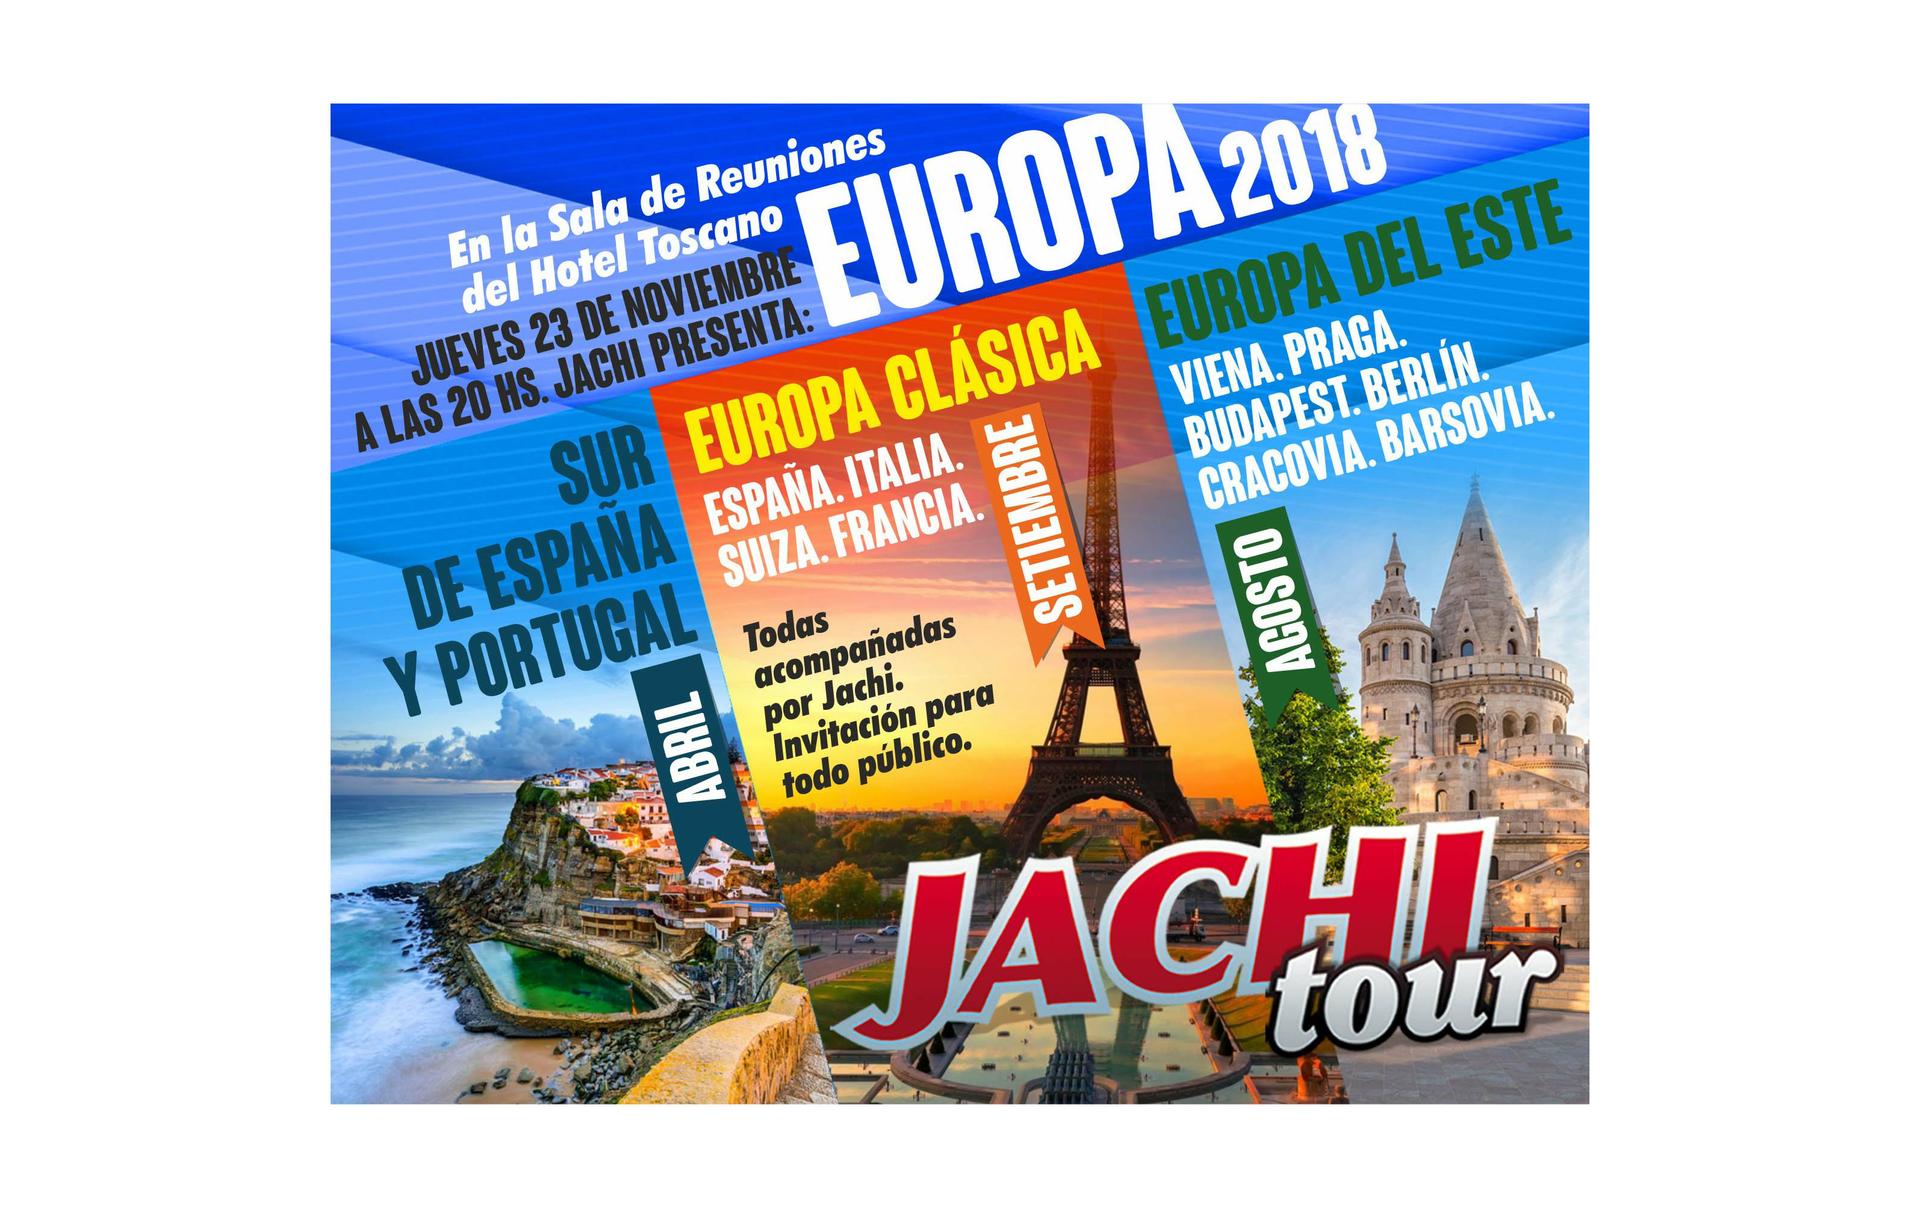 jachi tour viajes y turismo